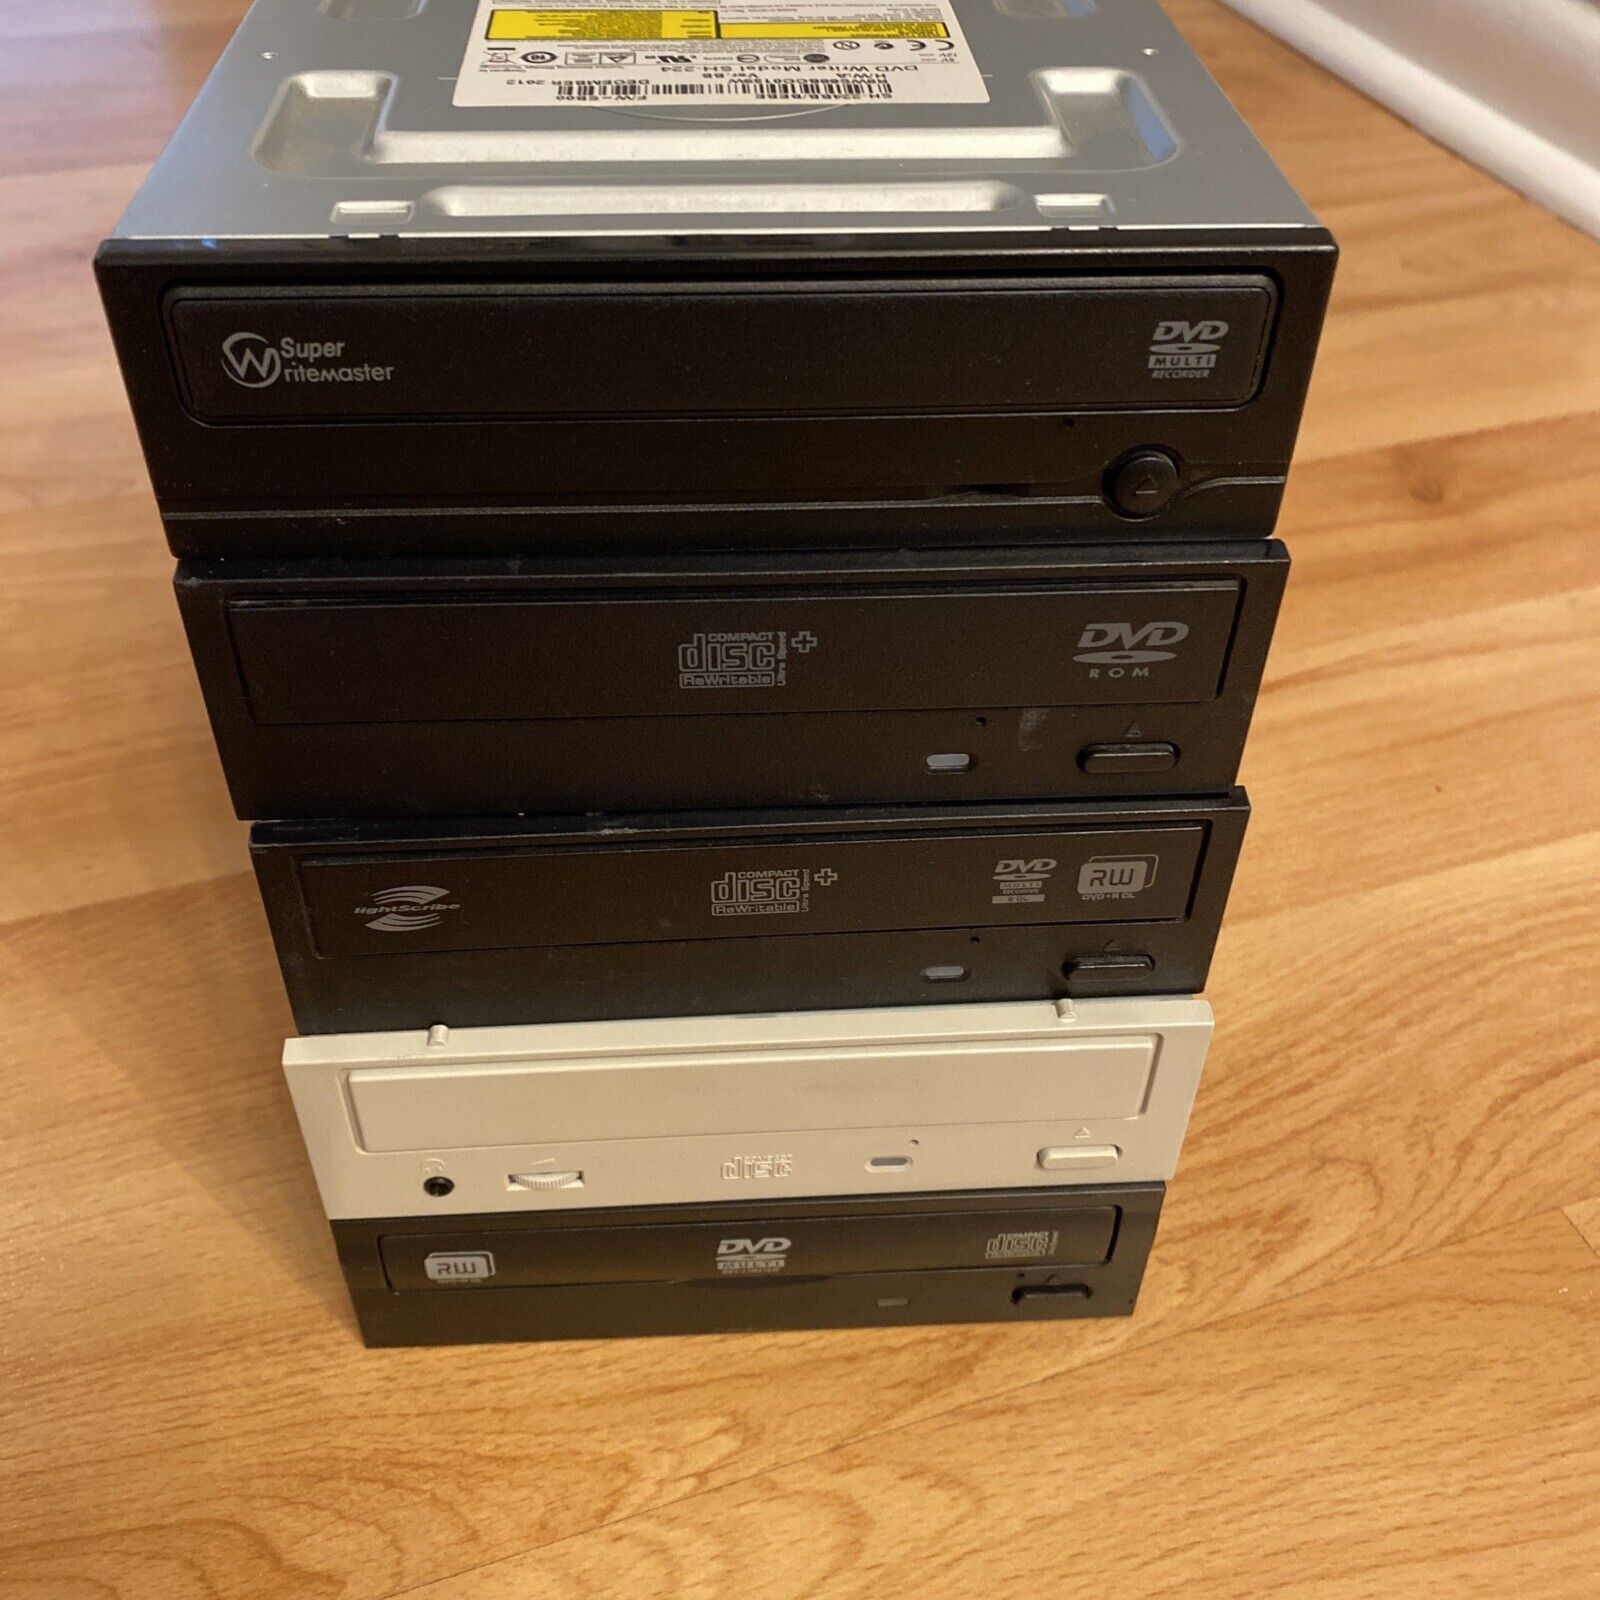 Lot of 5 CD/DVD Roms - HP, Super Writemaster, Litescribe, Compaq - Tested